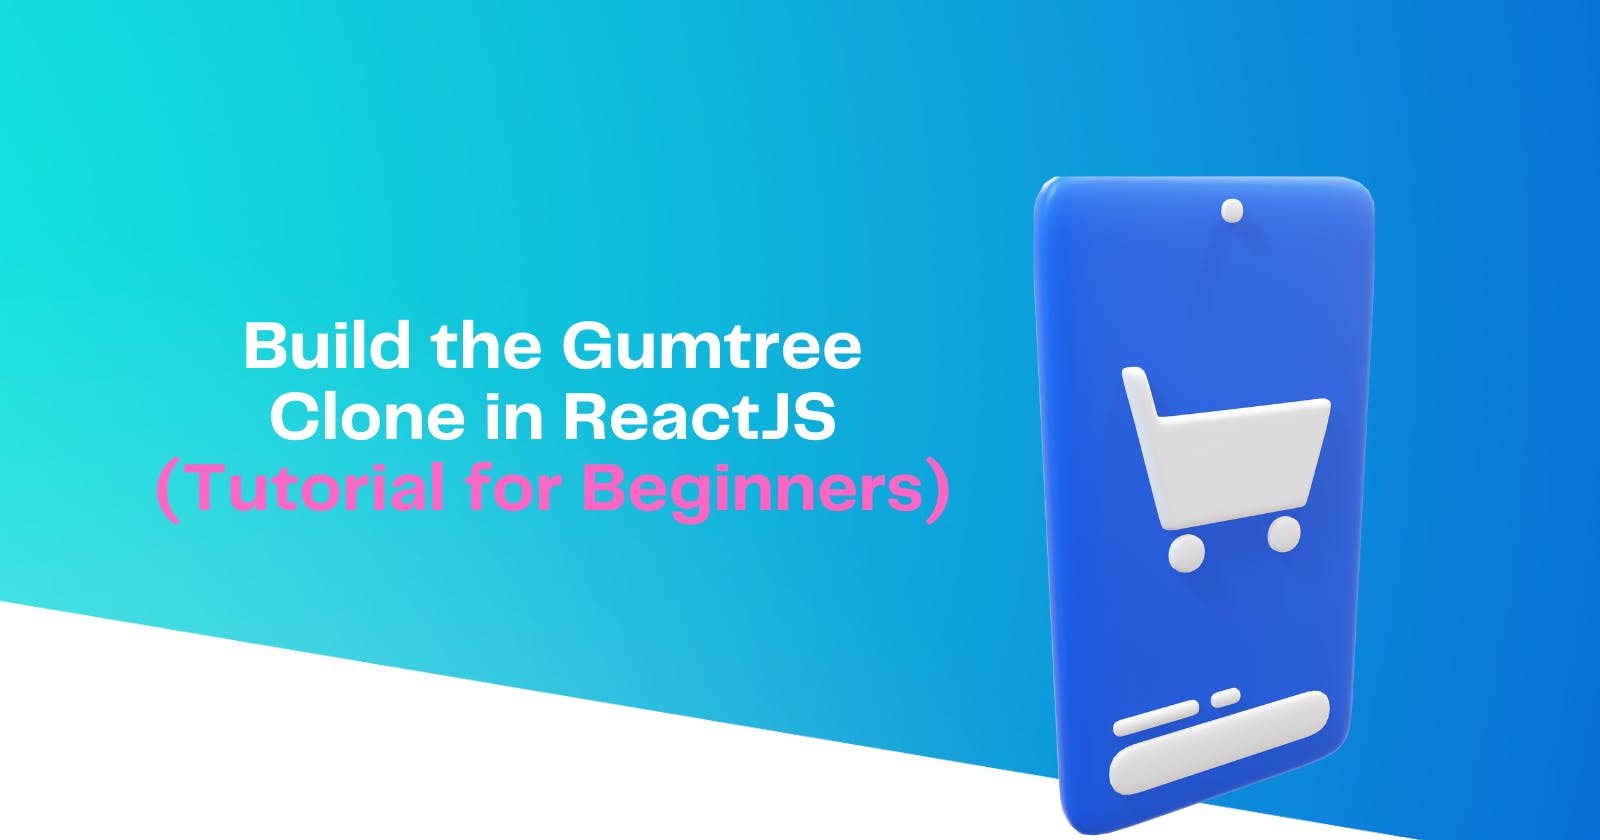 Build the Gumtree Clone in ReactJS (Tutorial for Beginners)